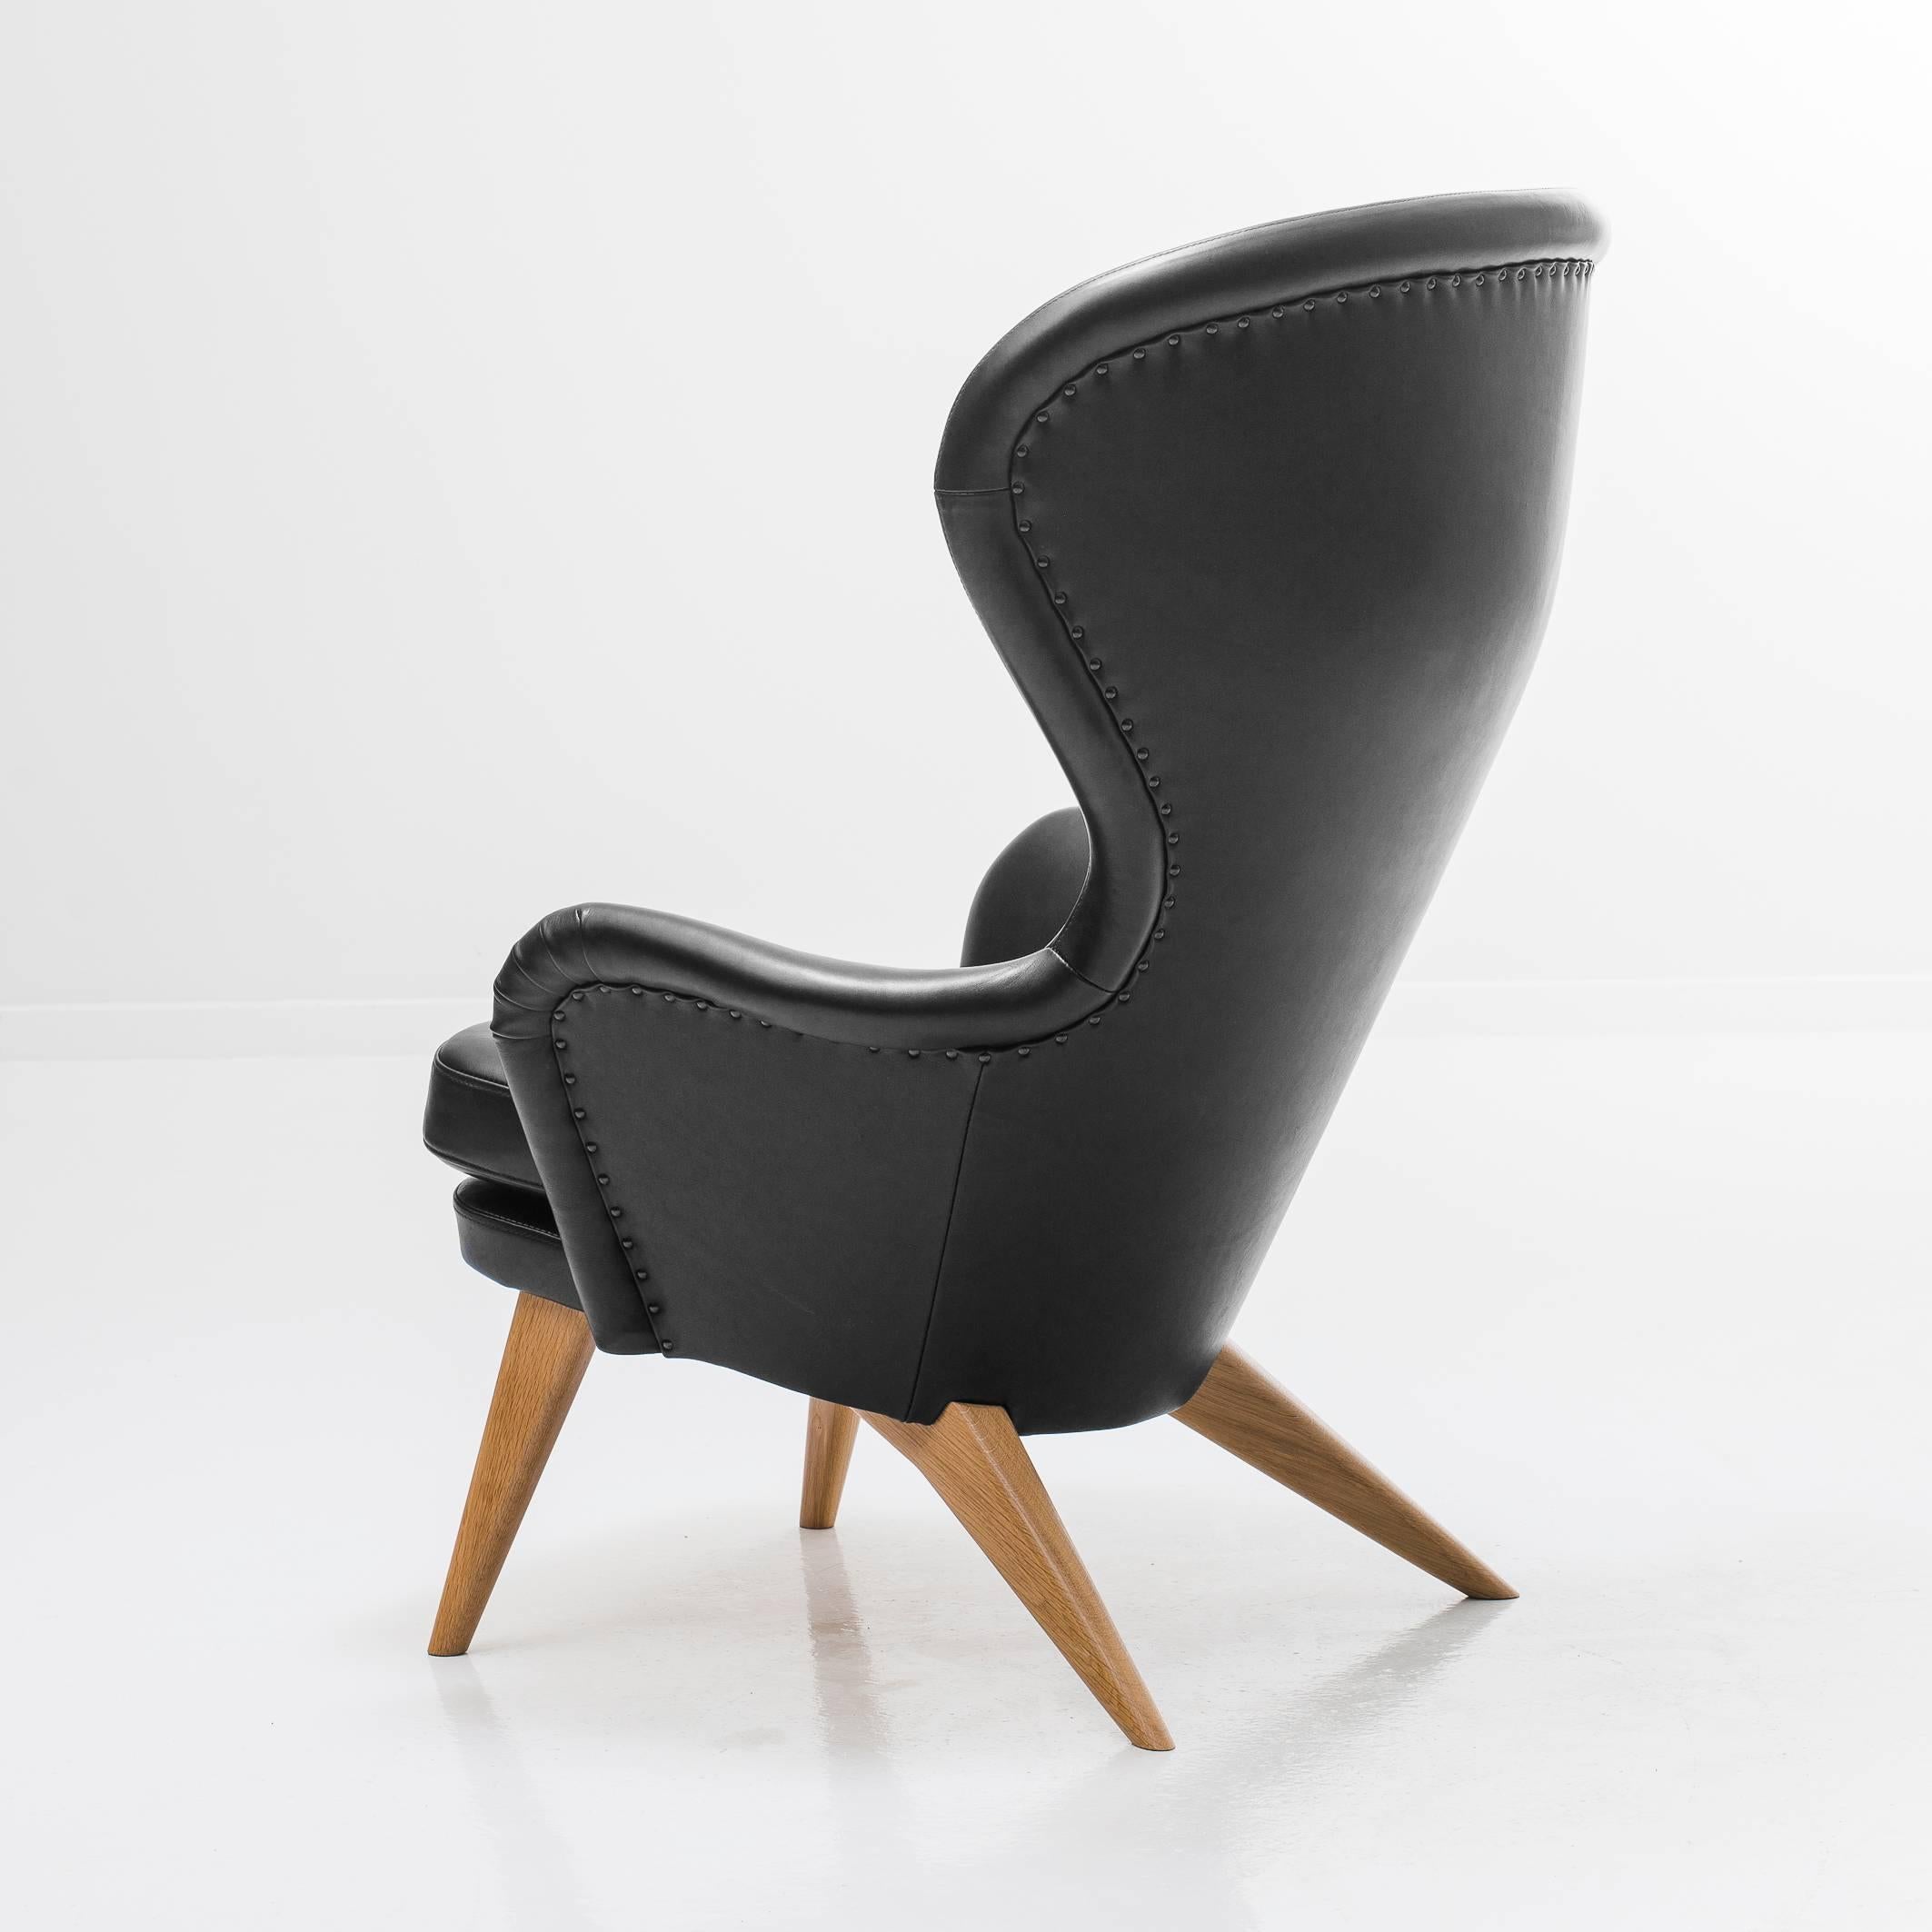 Scandinavian Modern Siesta Lounge Chair in Black Leather Design by Carl Gustav Hiort af Ornäs For Sale